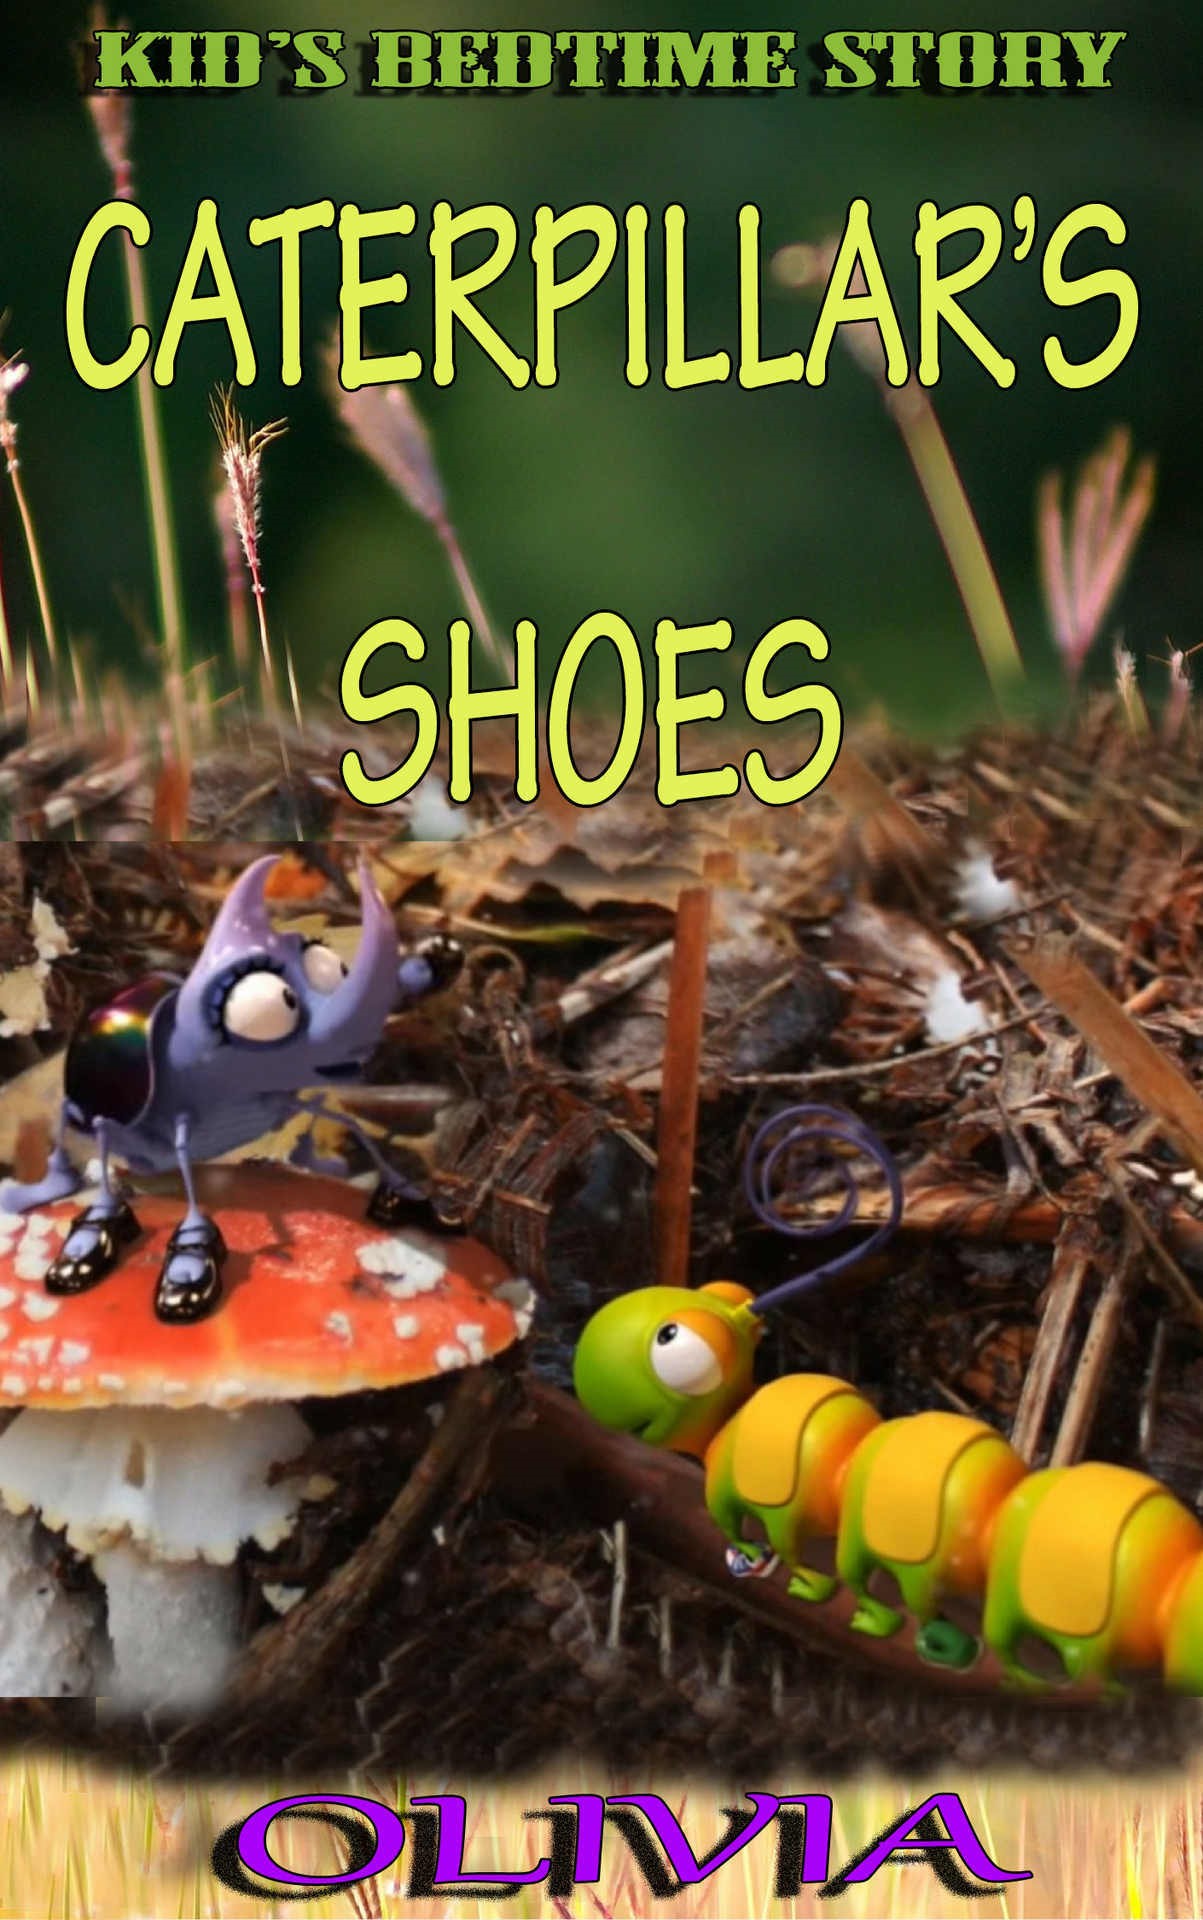 Caterpillar’s Shoes